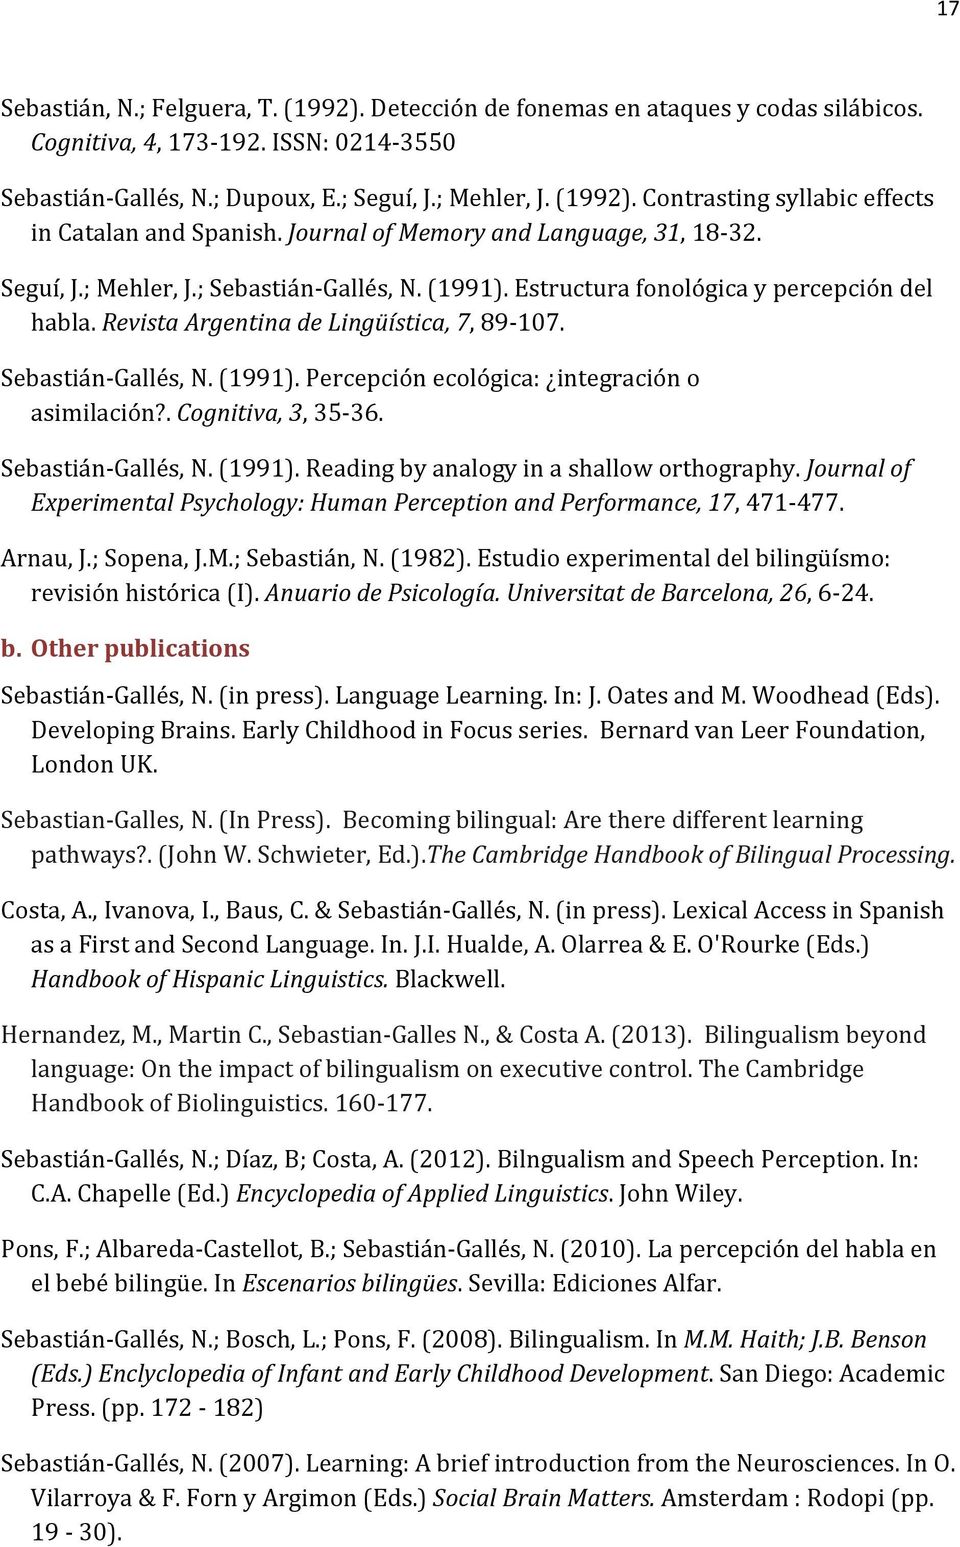 .cognitiva,3,35s36. SebastiánSGallés,N.(1991).Readingbyanalogyinashalloworthography.Journalof ExperimentalPsychology:HumanPerceptionandPerformance,17,471S477. Arnau,J.;Sopena,J.M.;Sebastián,N.(1982).